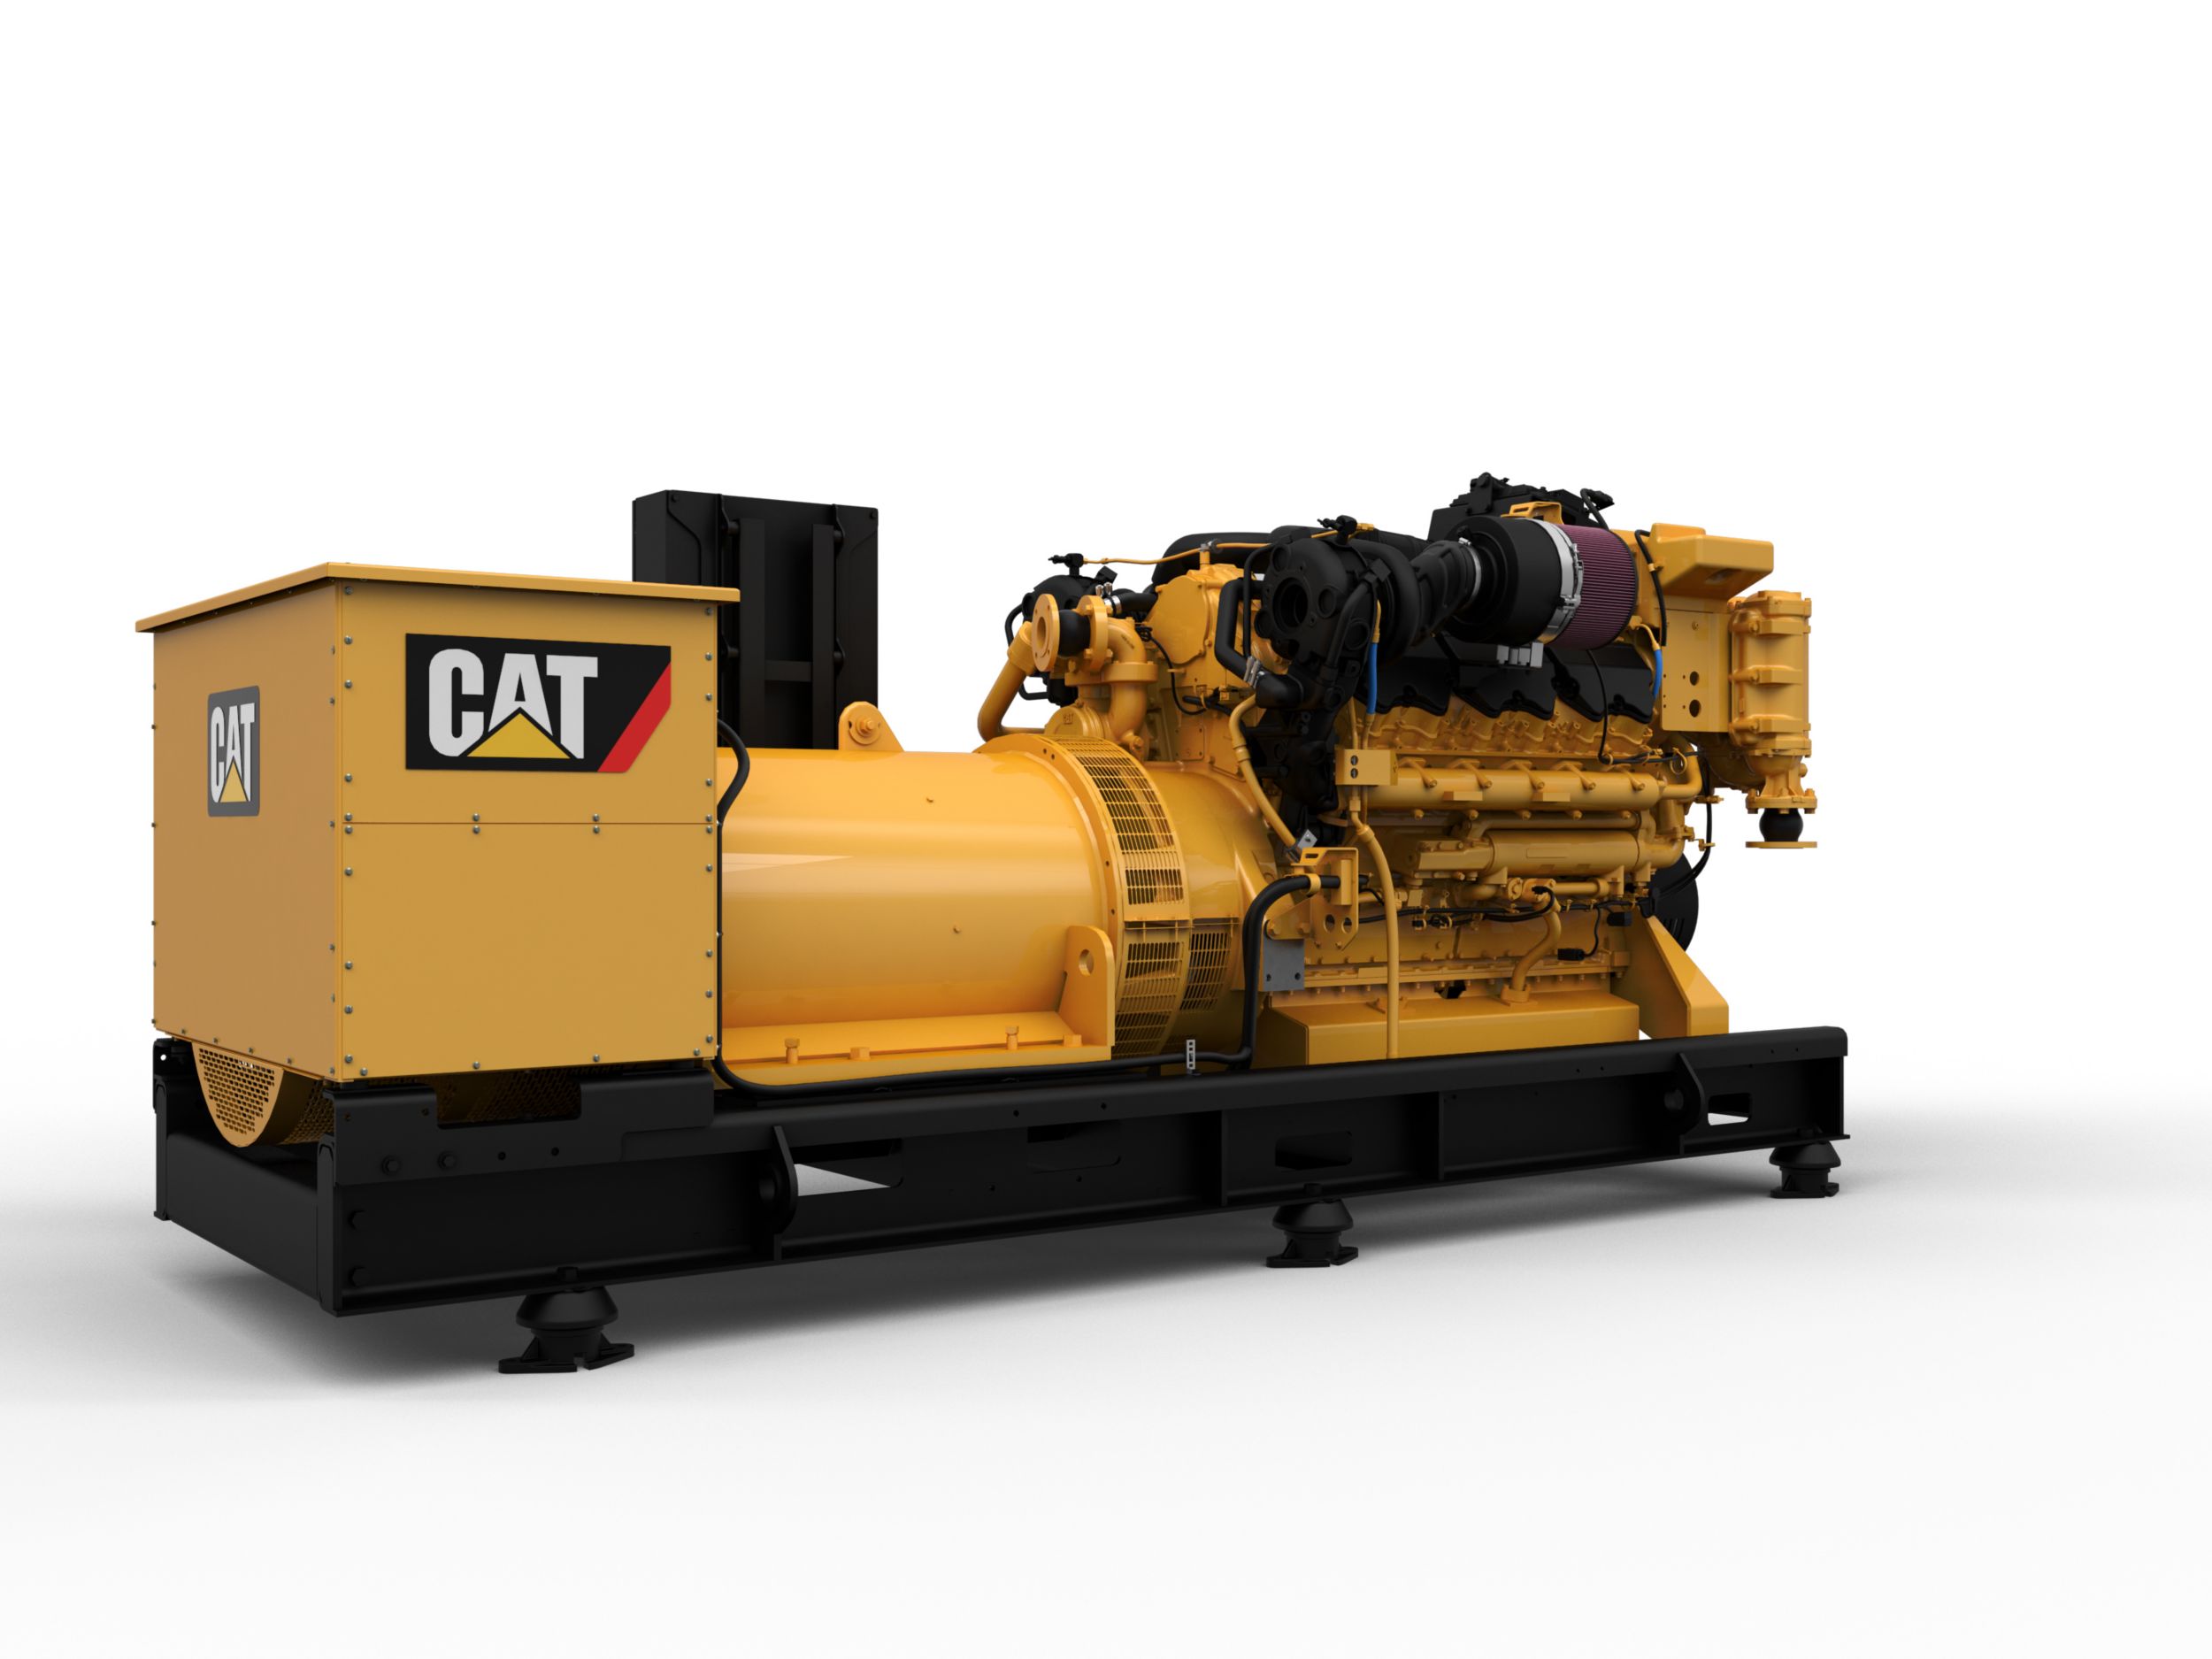 Caterpillar C27 Generator Specifications 635 800 Kw At 60hz Price Csdg